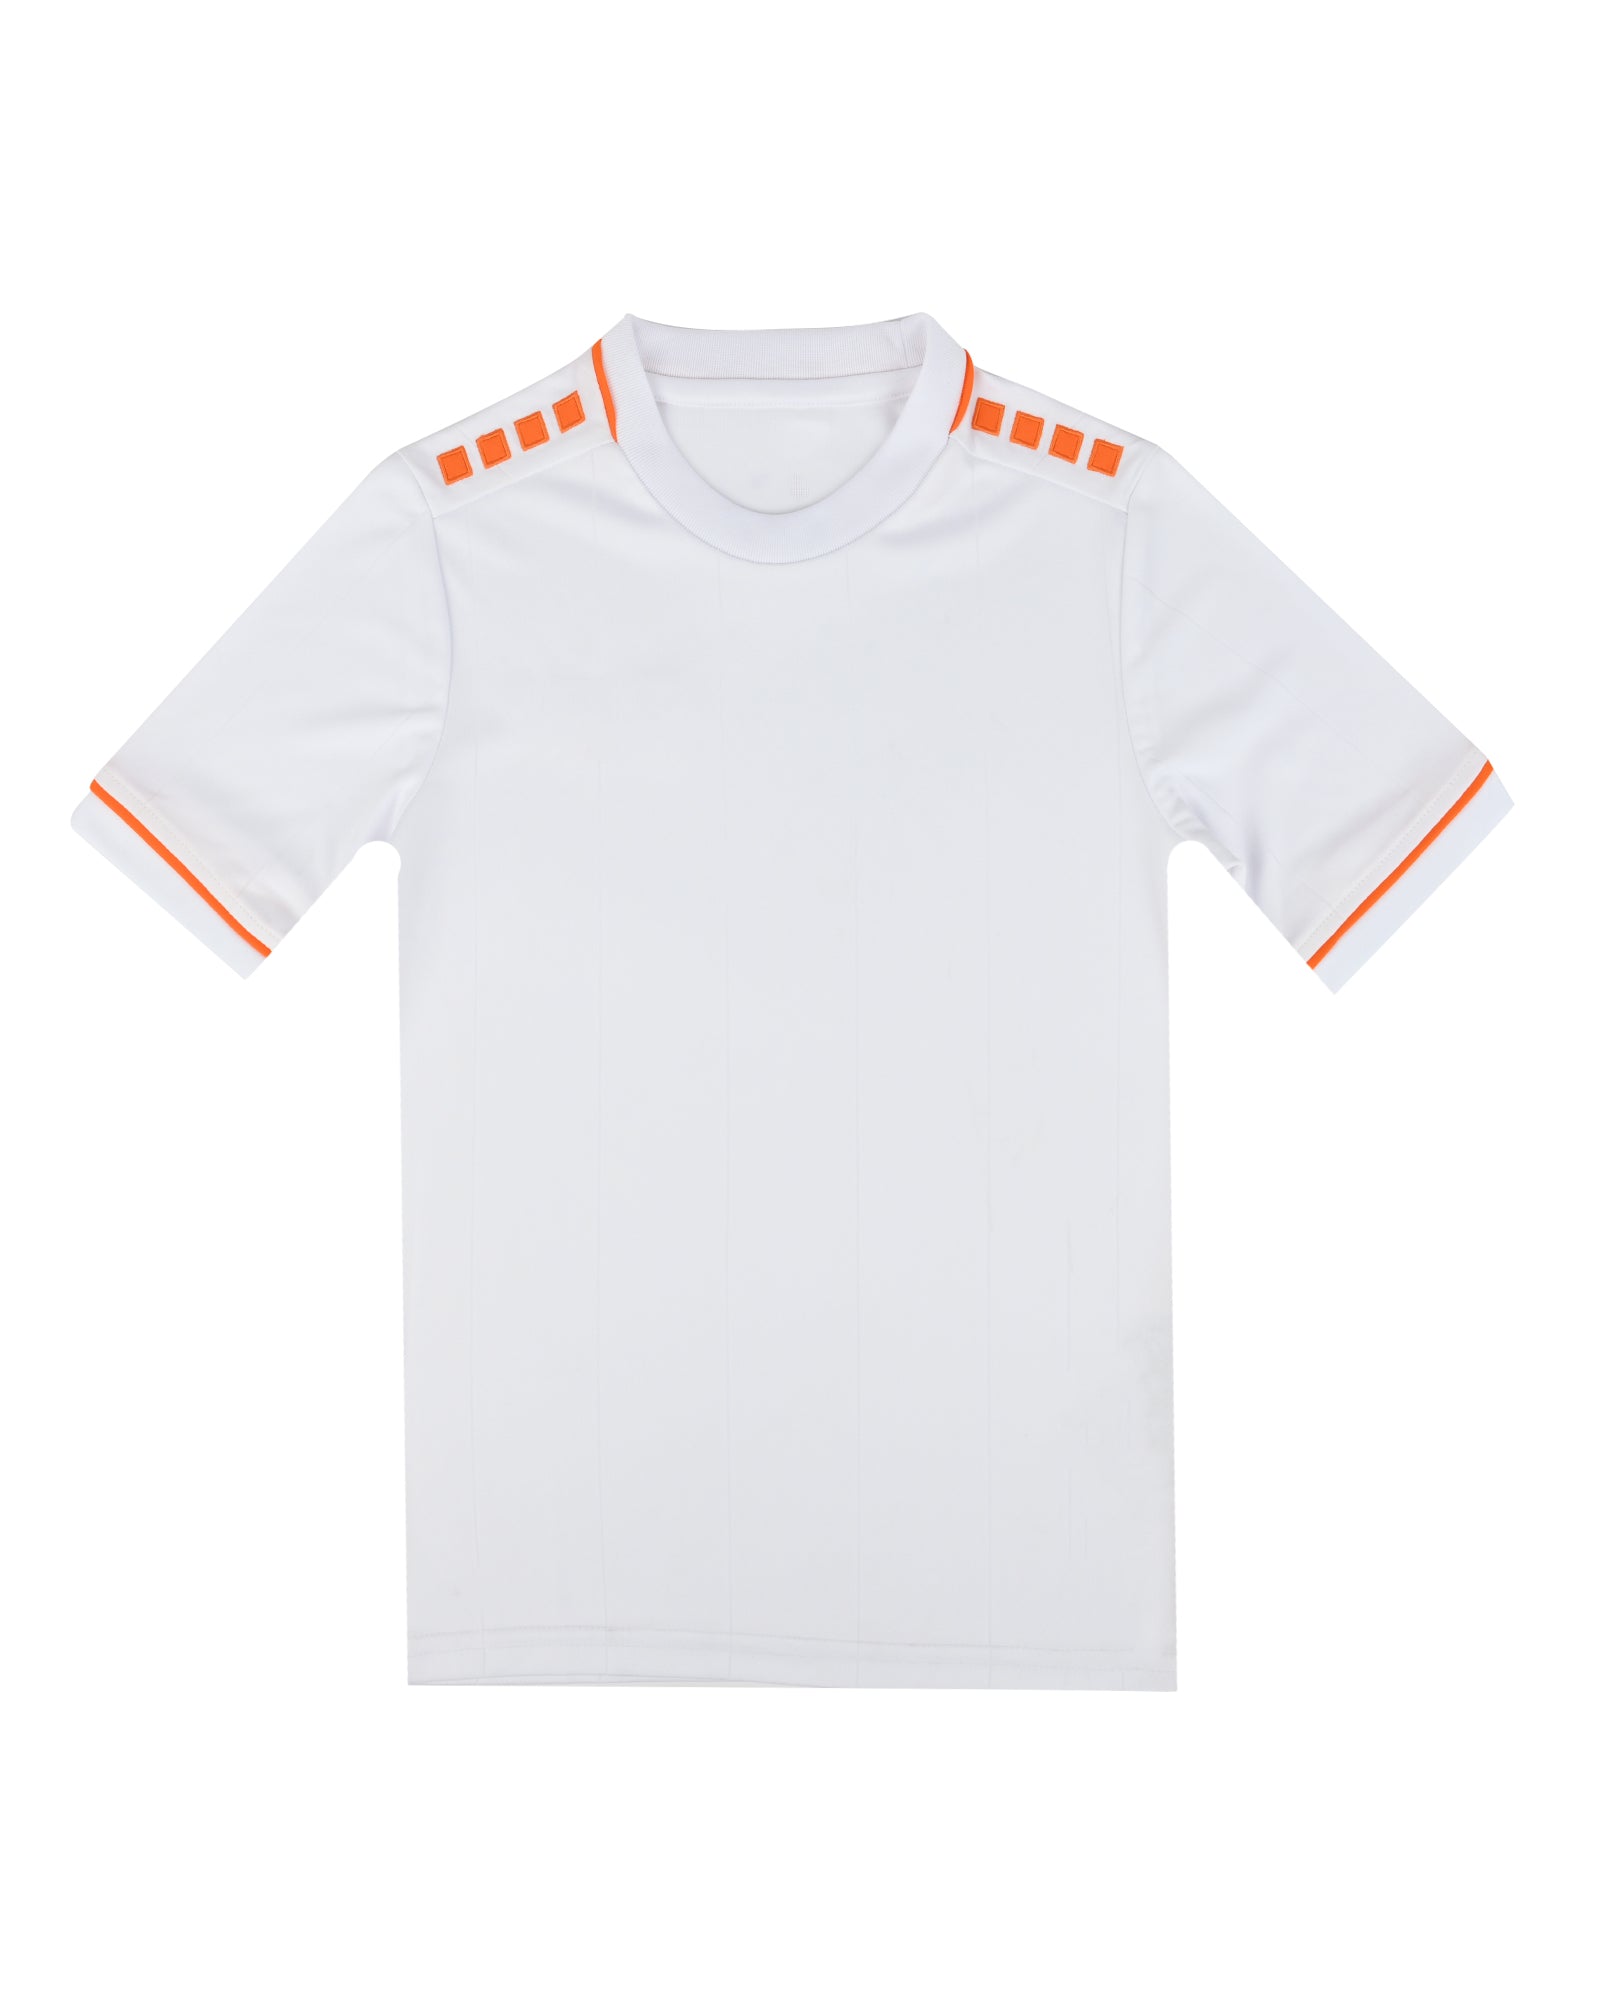 Boys Sports Half Sleeve T-Shirt: Comfortable and Stylish for Active Boys